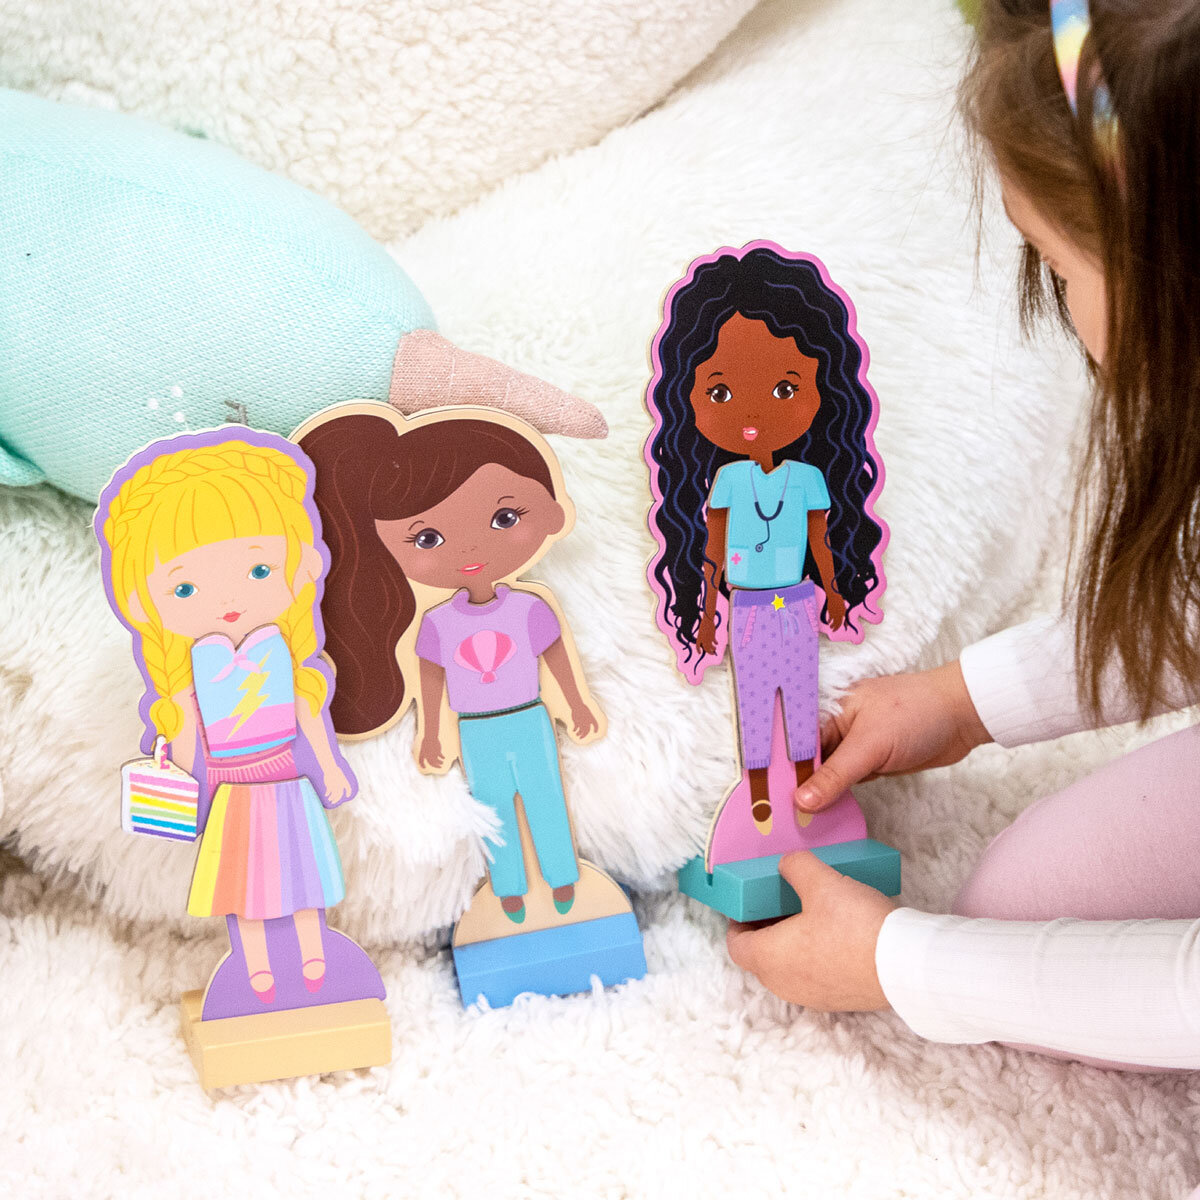 Buy Story Magic Wooden Dolls Lifestyle Image at Costco.co.uk